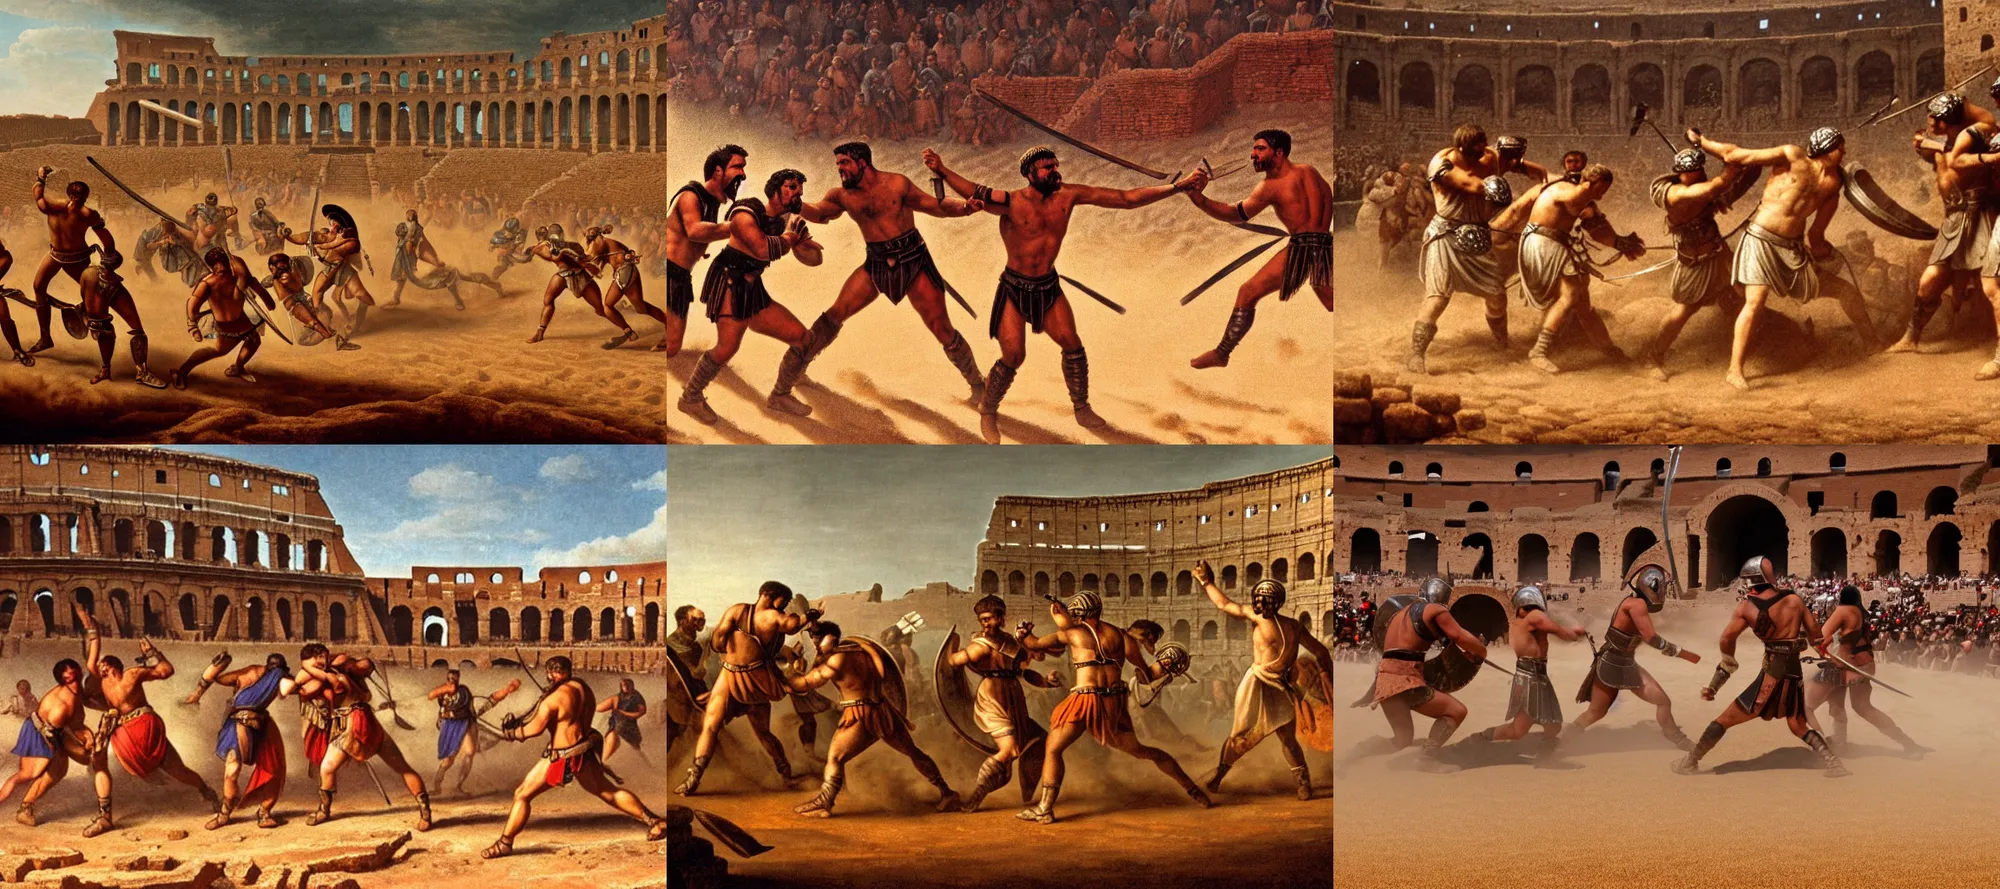 Prompt: Gladiators fighting in a roman colosseum sandstorm